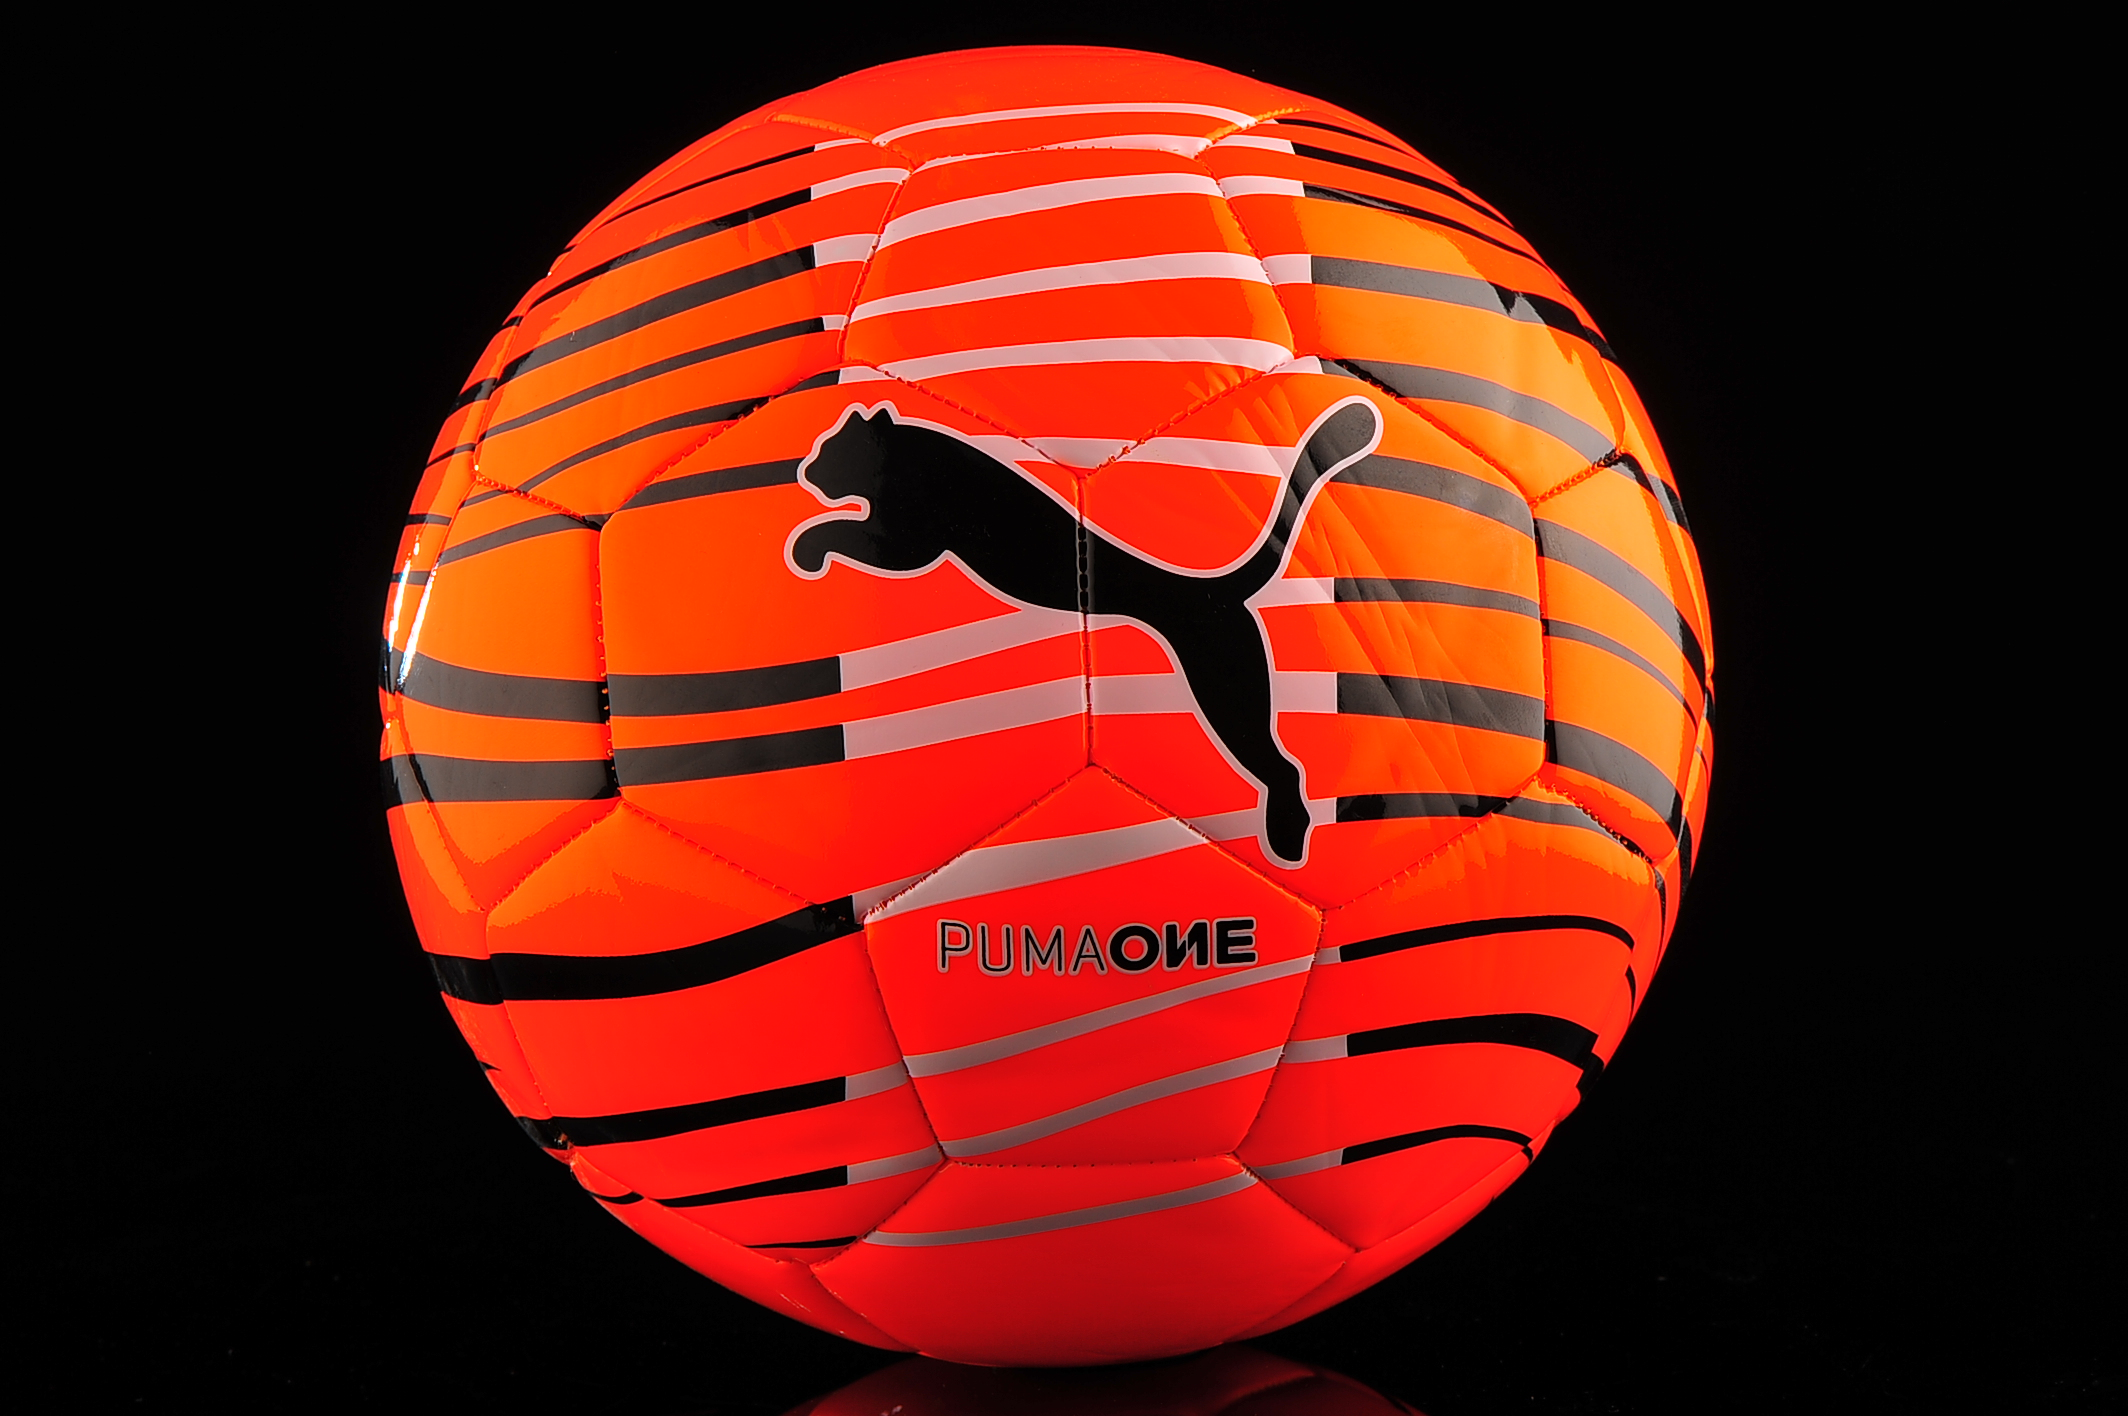 Ball Puma One Wave 082822 01 size 5 | R 